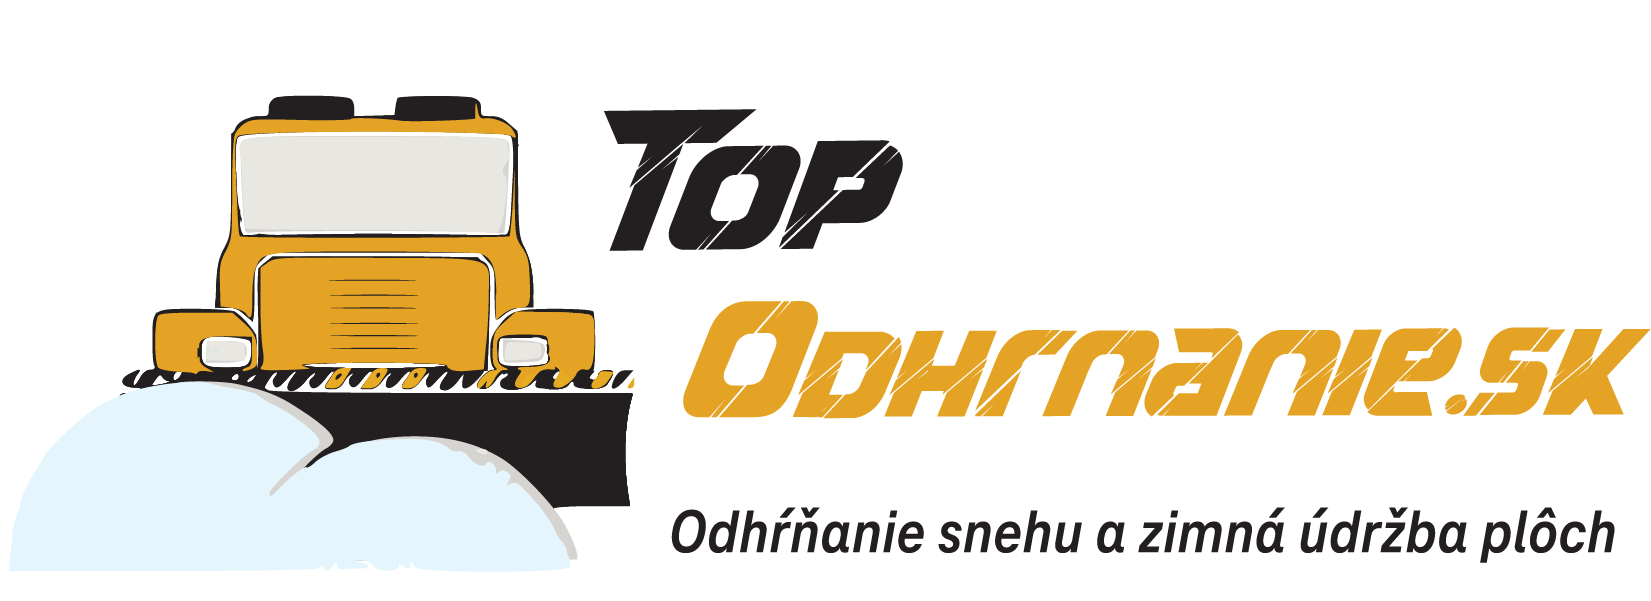 www.TopOdhrnanie.sk